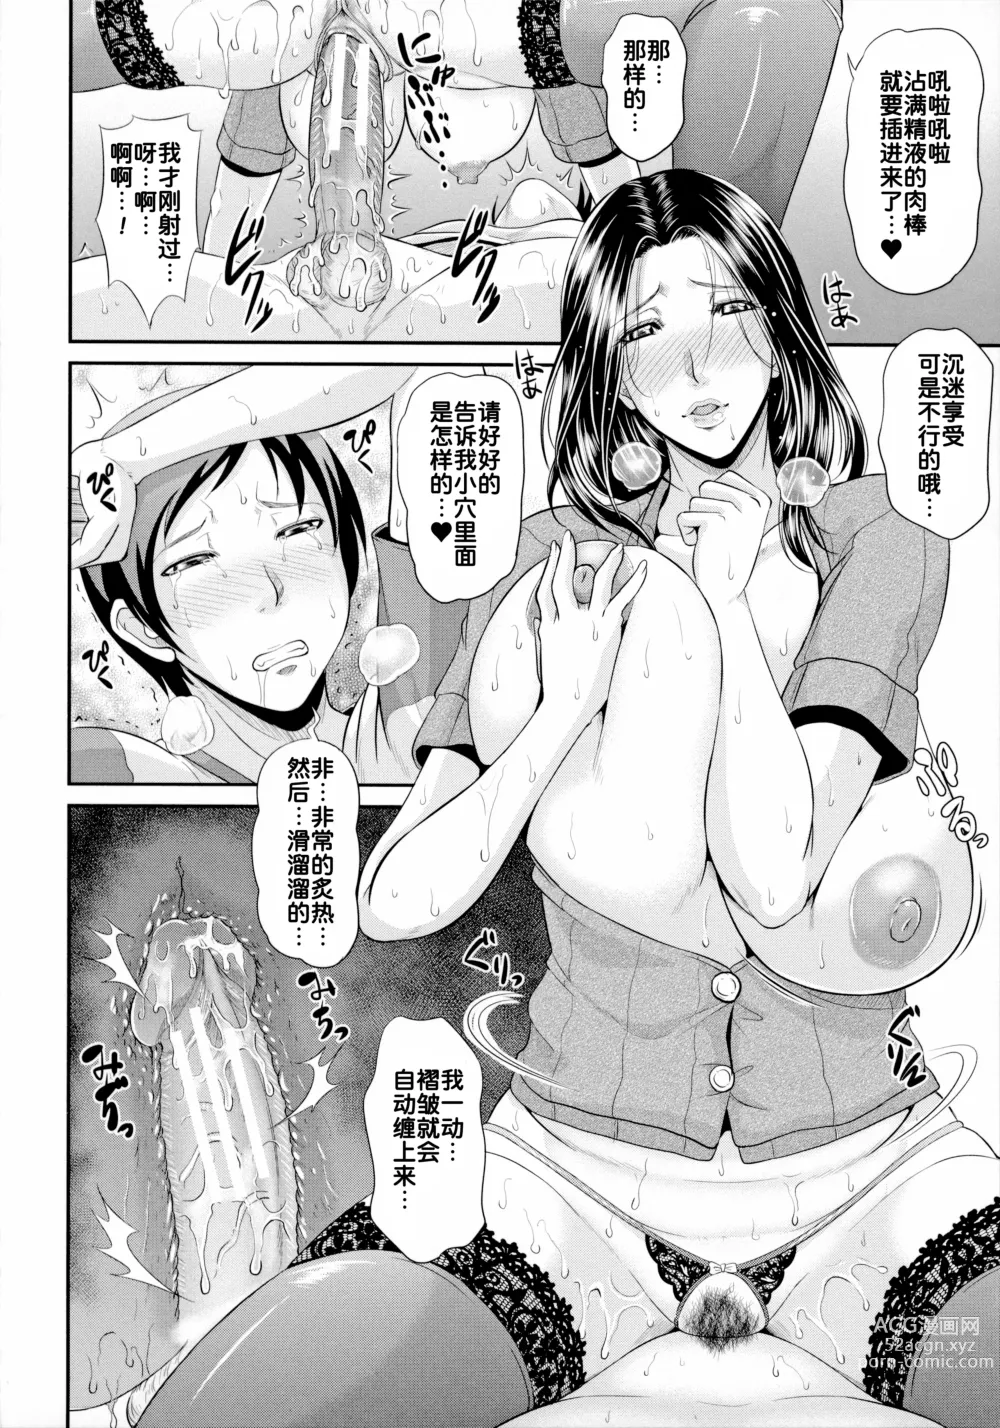 Page 191 of manga Uruwashi no Wife